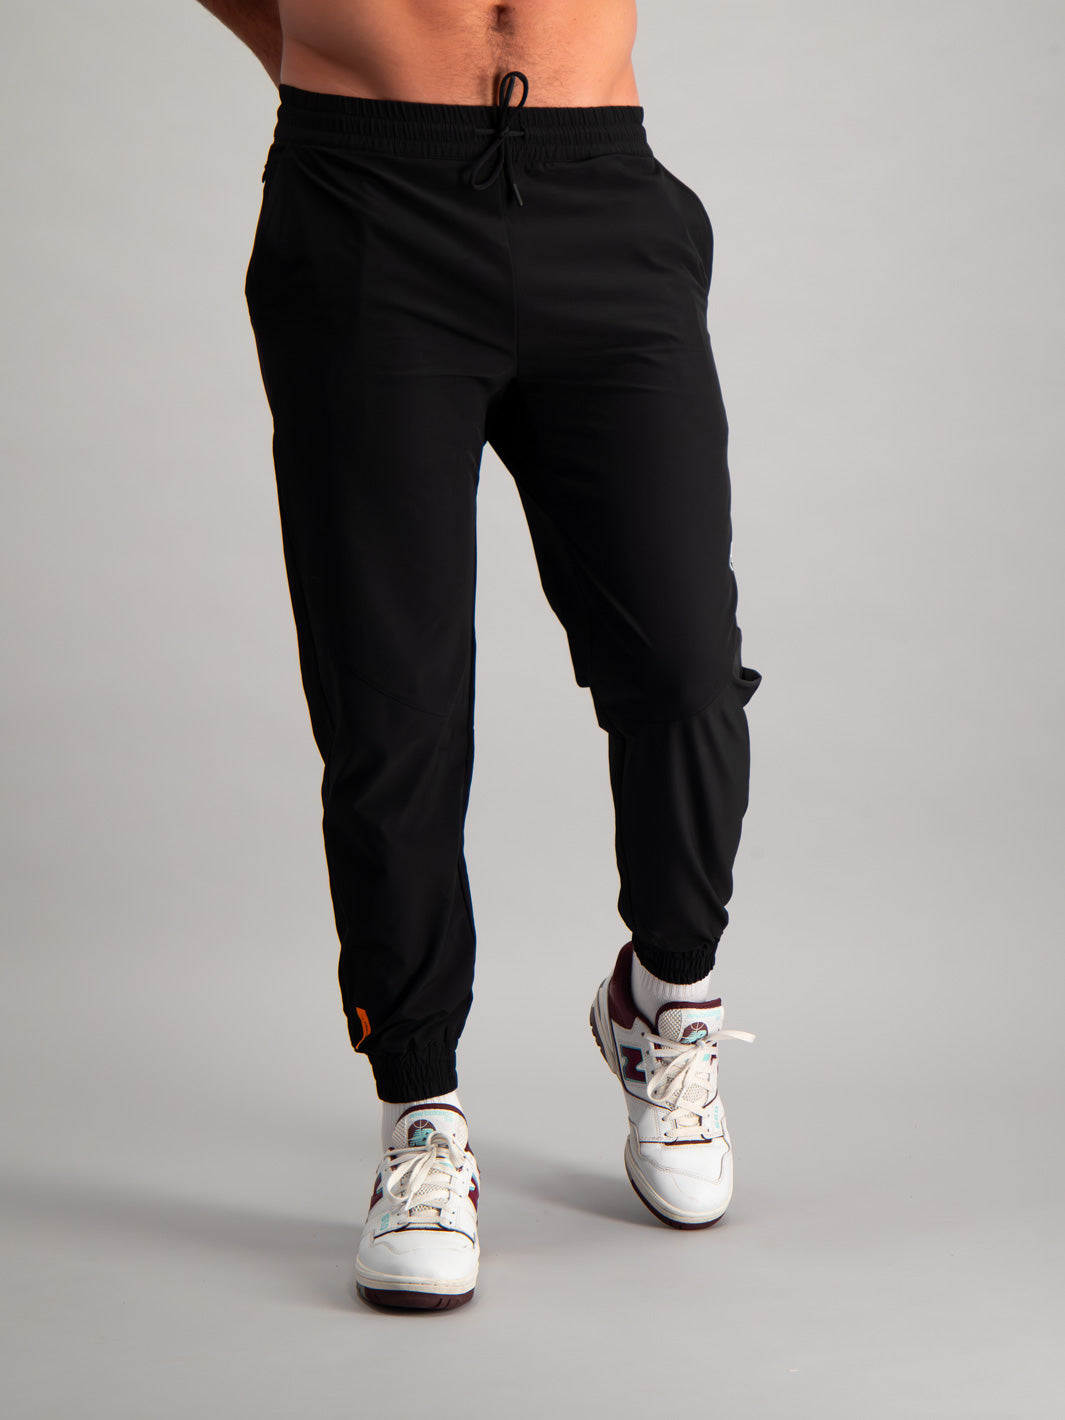 GB, Core Oversize Joggers - Black, Workout Pants Women